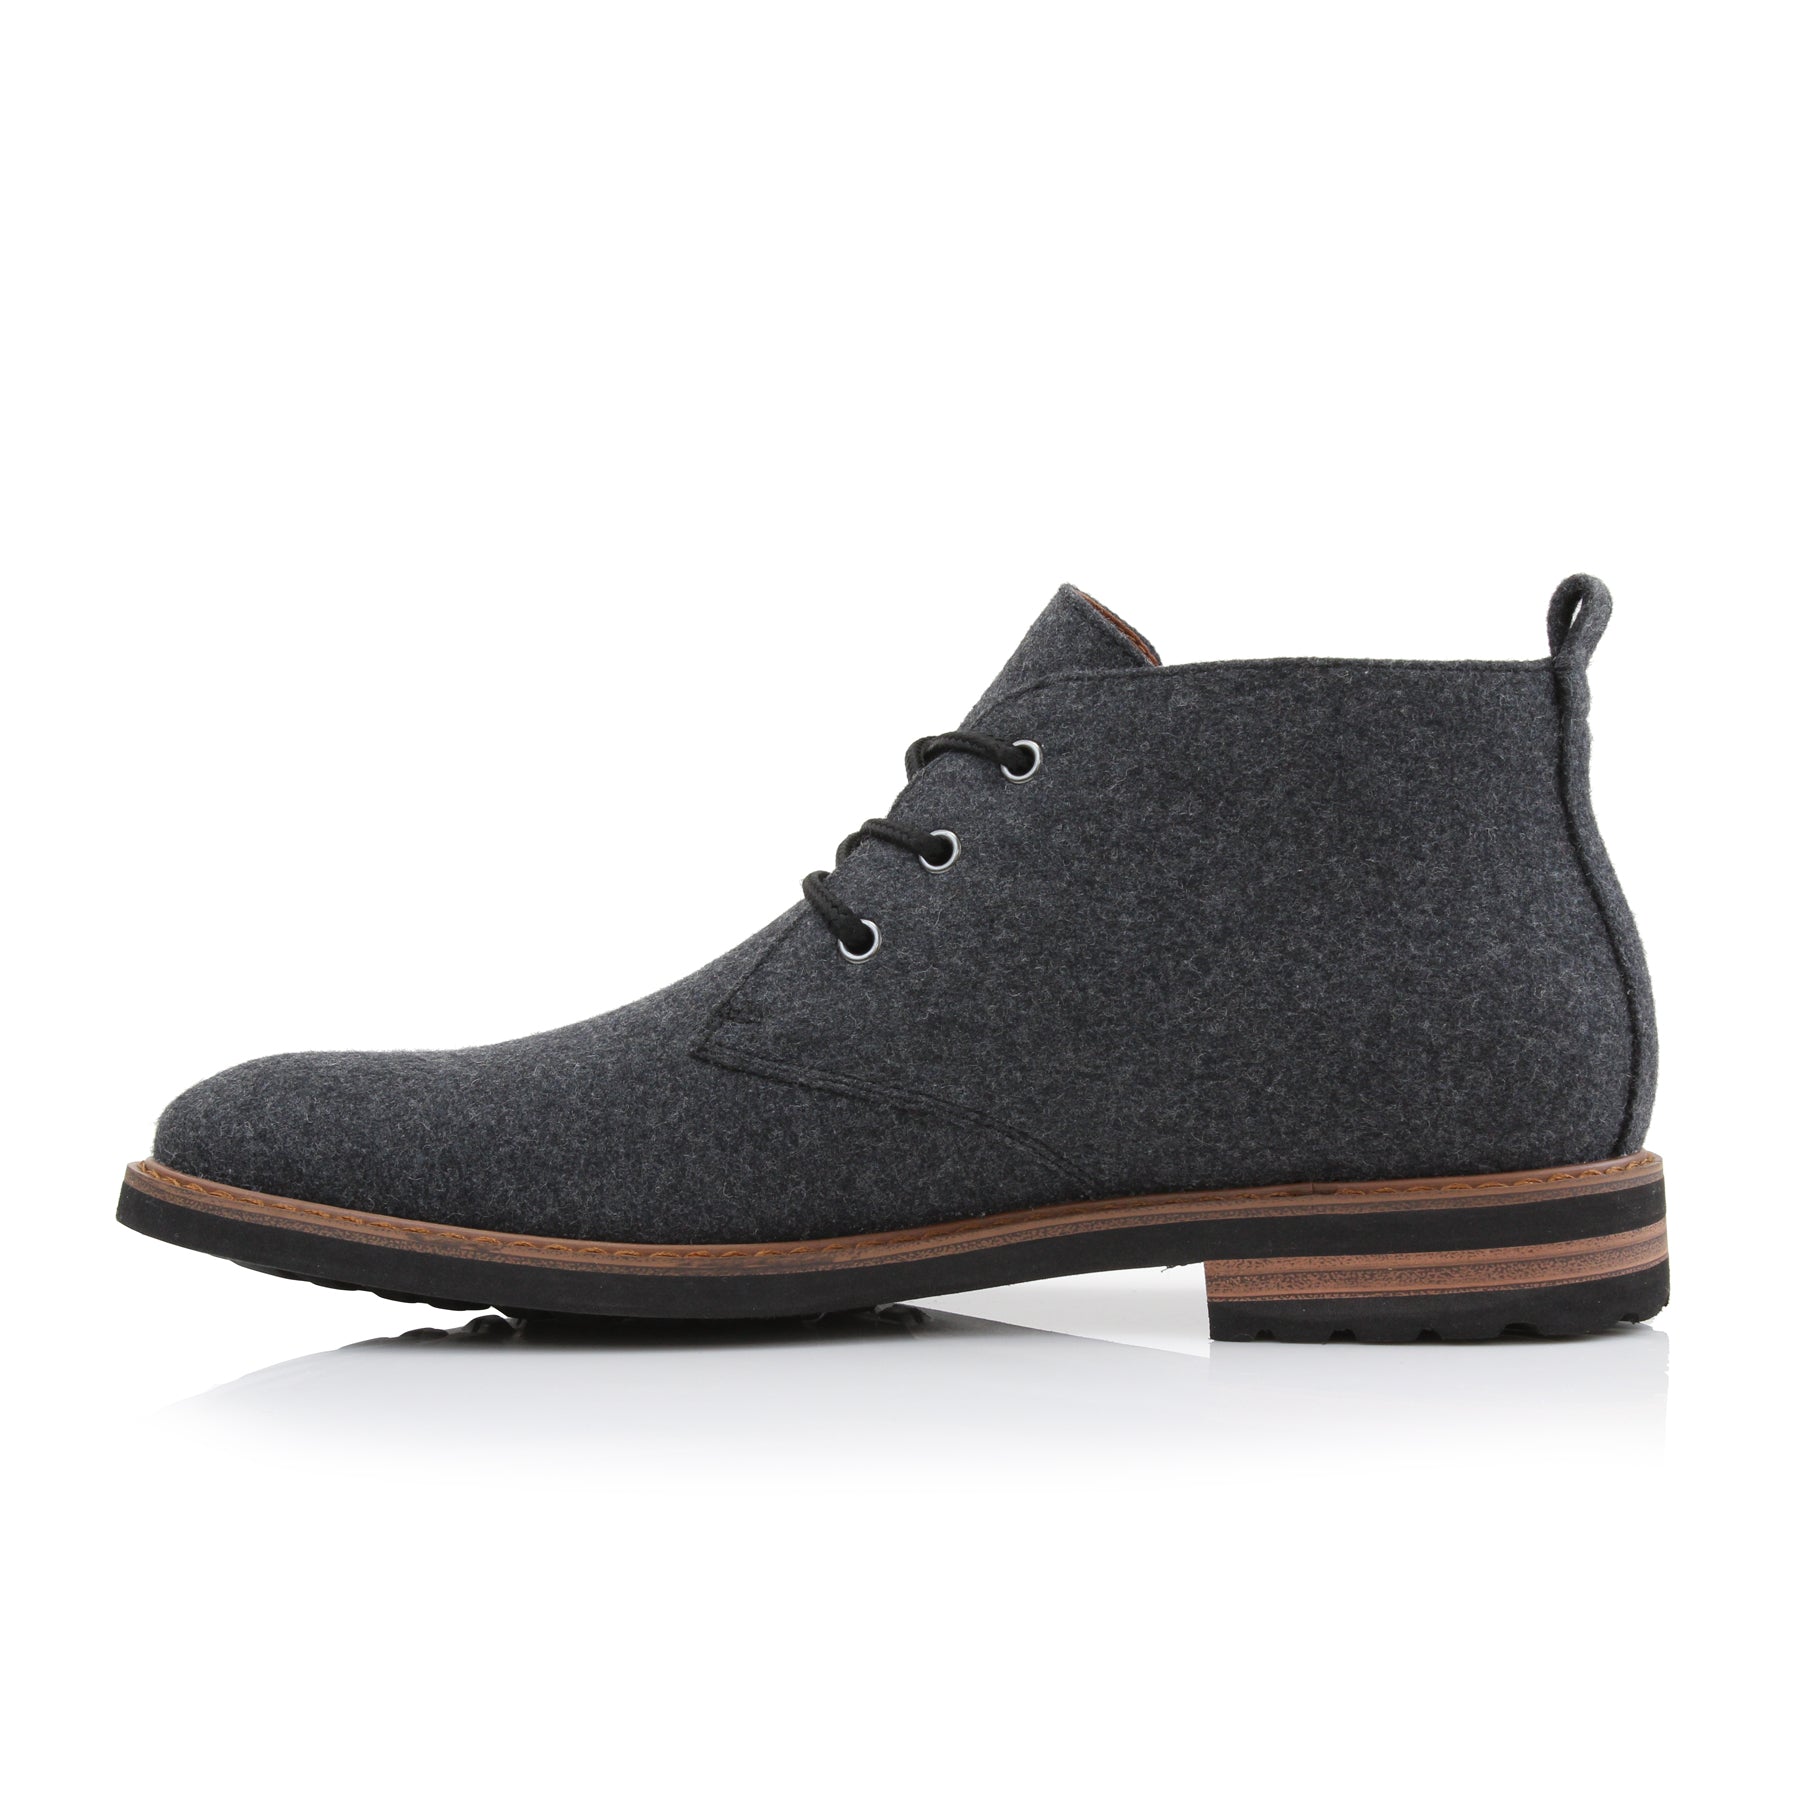 Woolen Chukka Boots | Pablo by Ferro Aldo | Conal Footwear | Inner Side Angle View